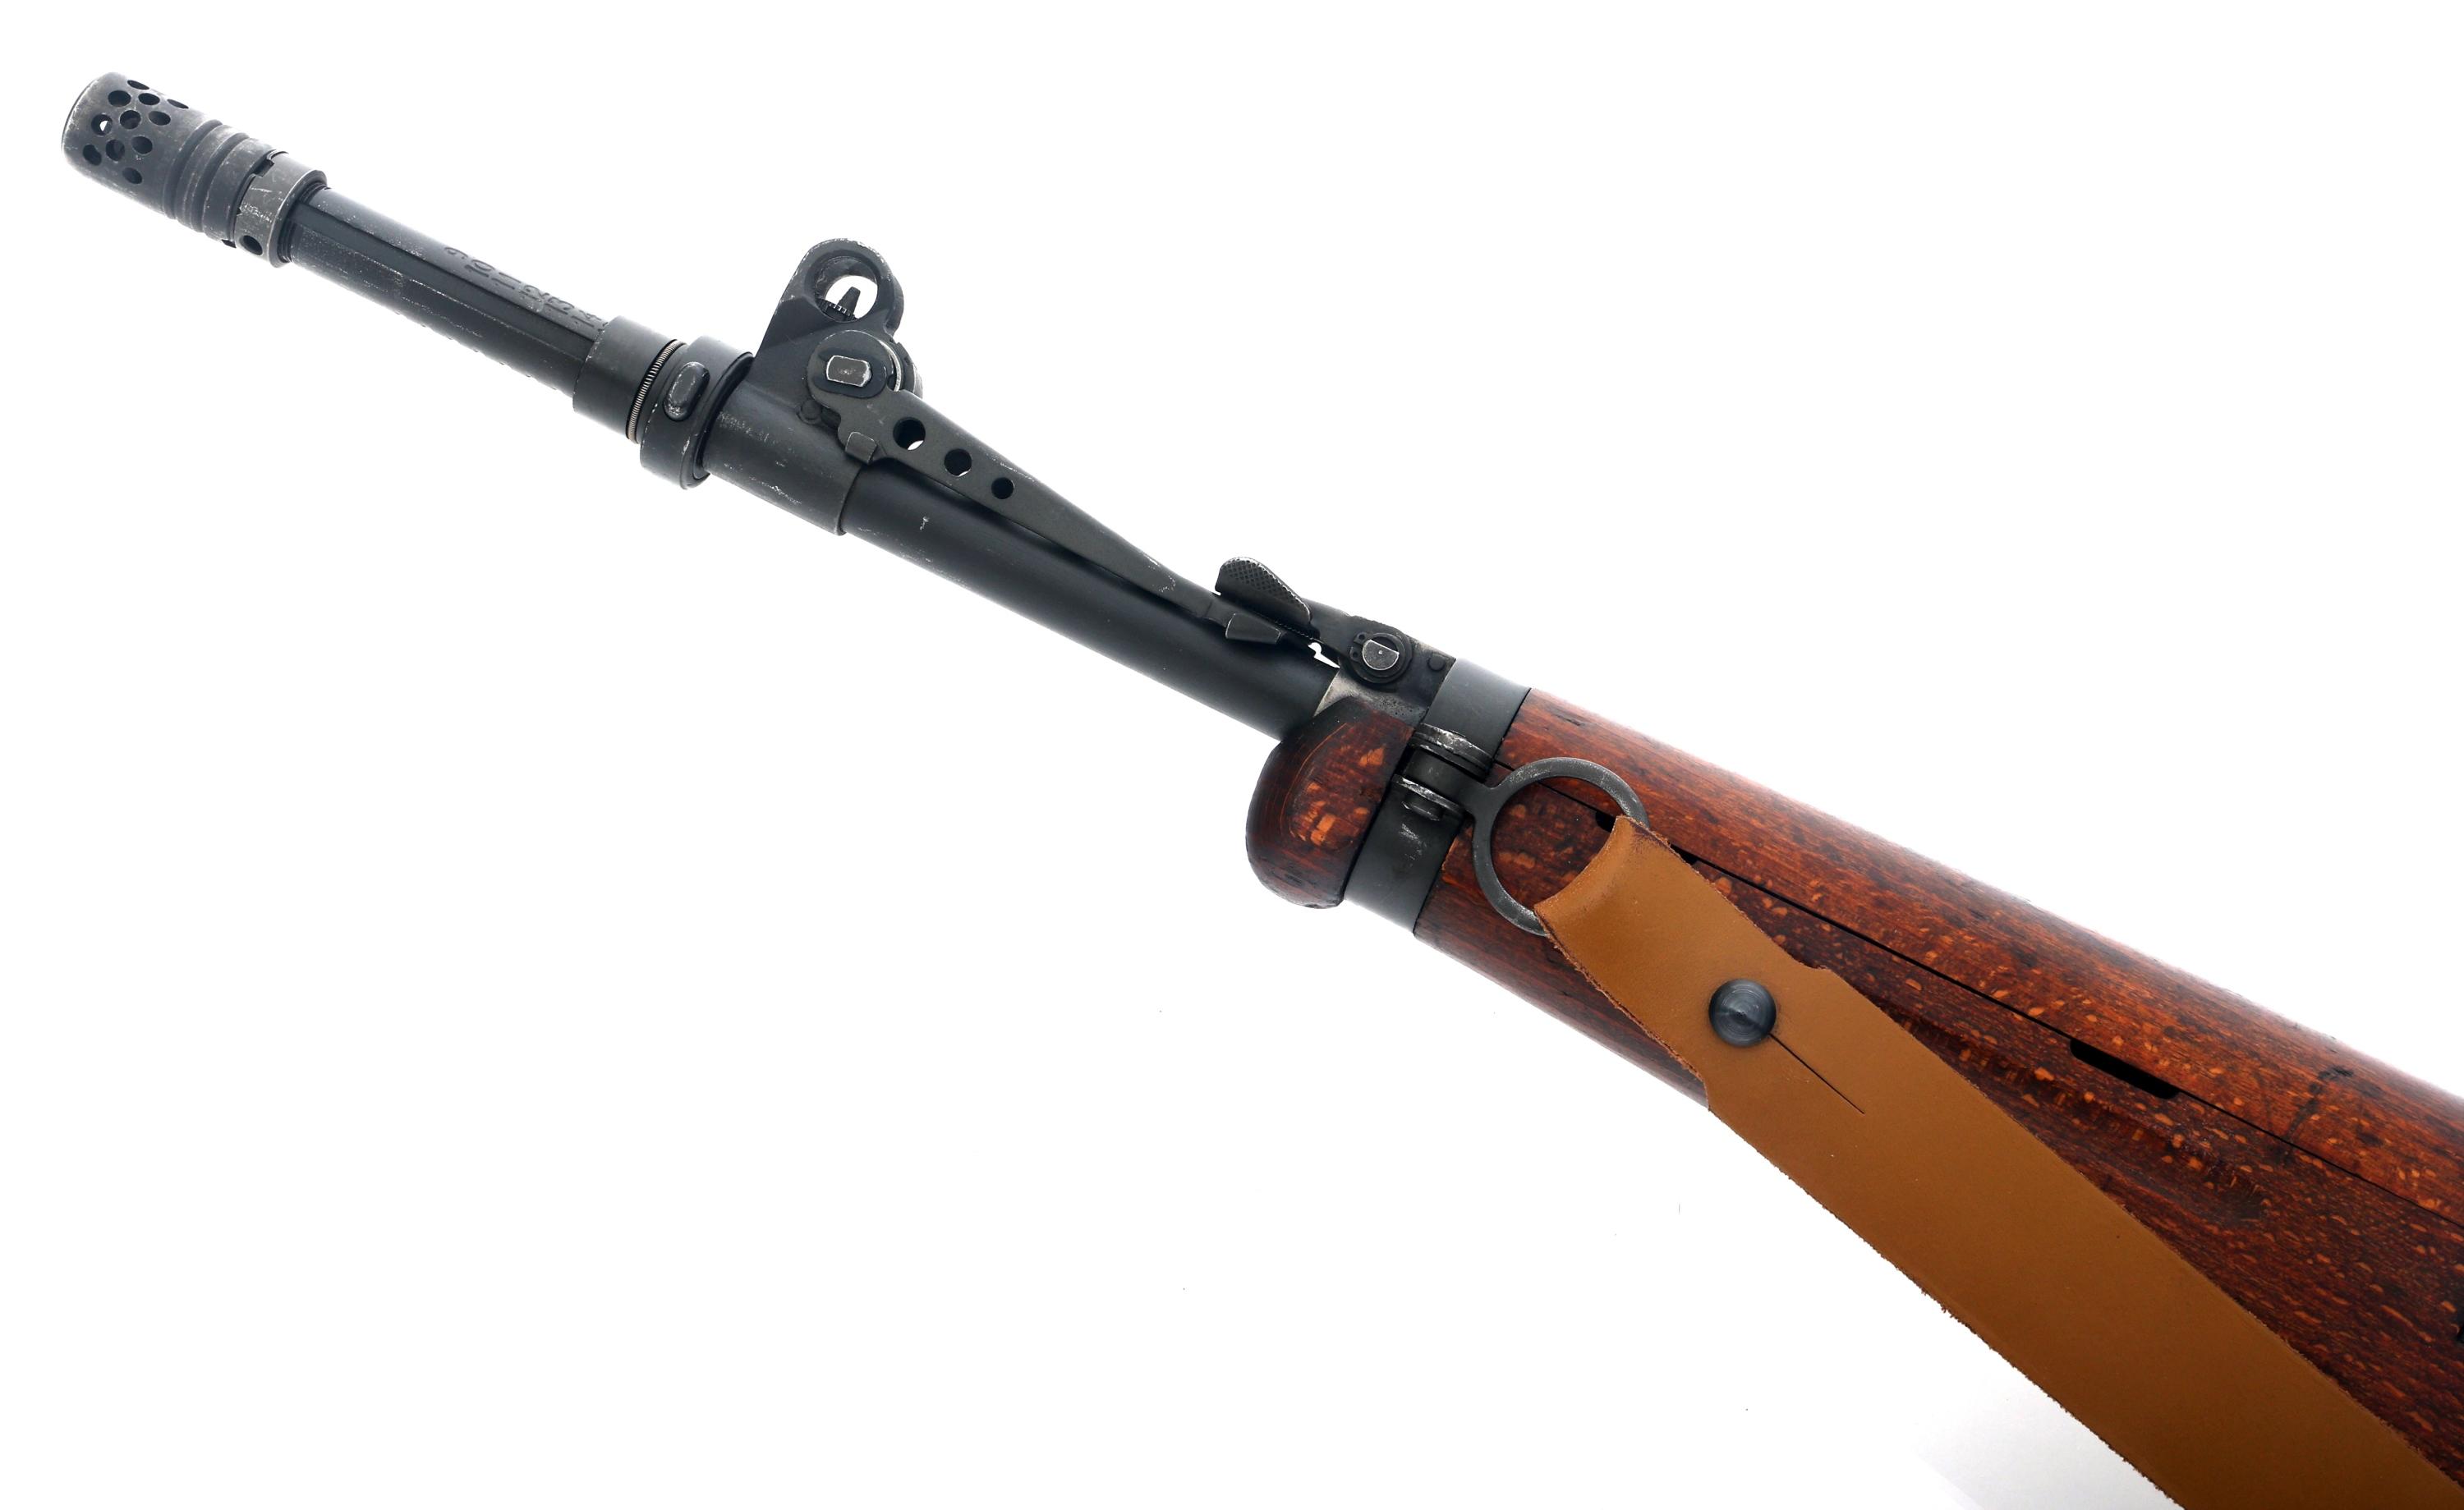 FRENCH MAS MODEL 1949/56 7.5x54mm CALIBER RIFLE